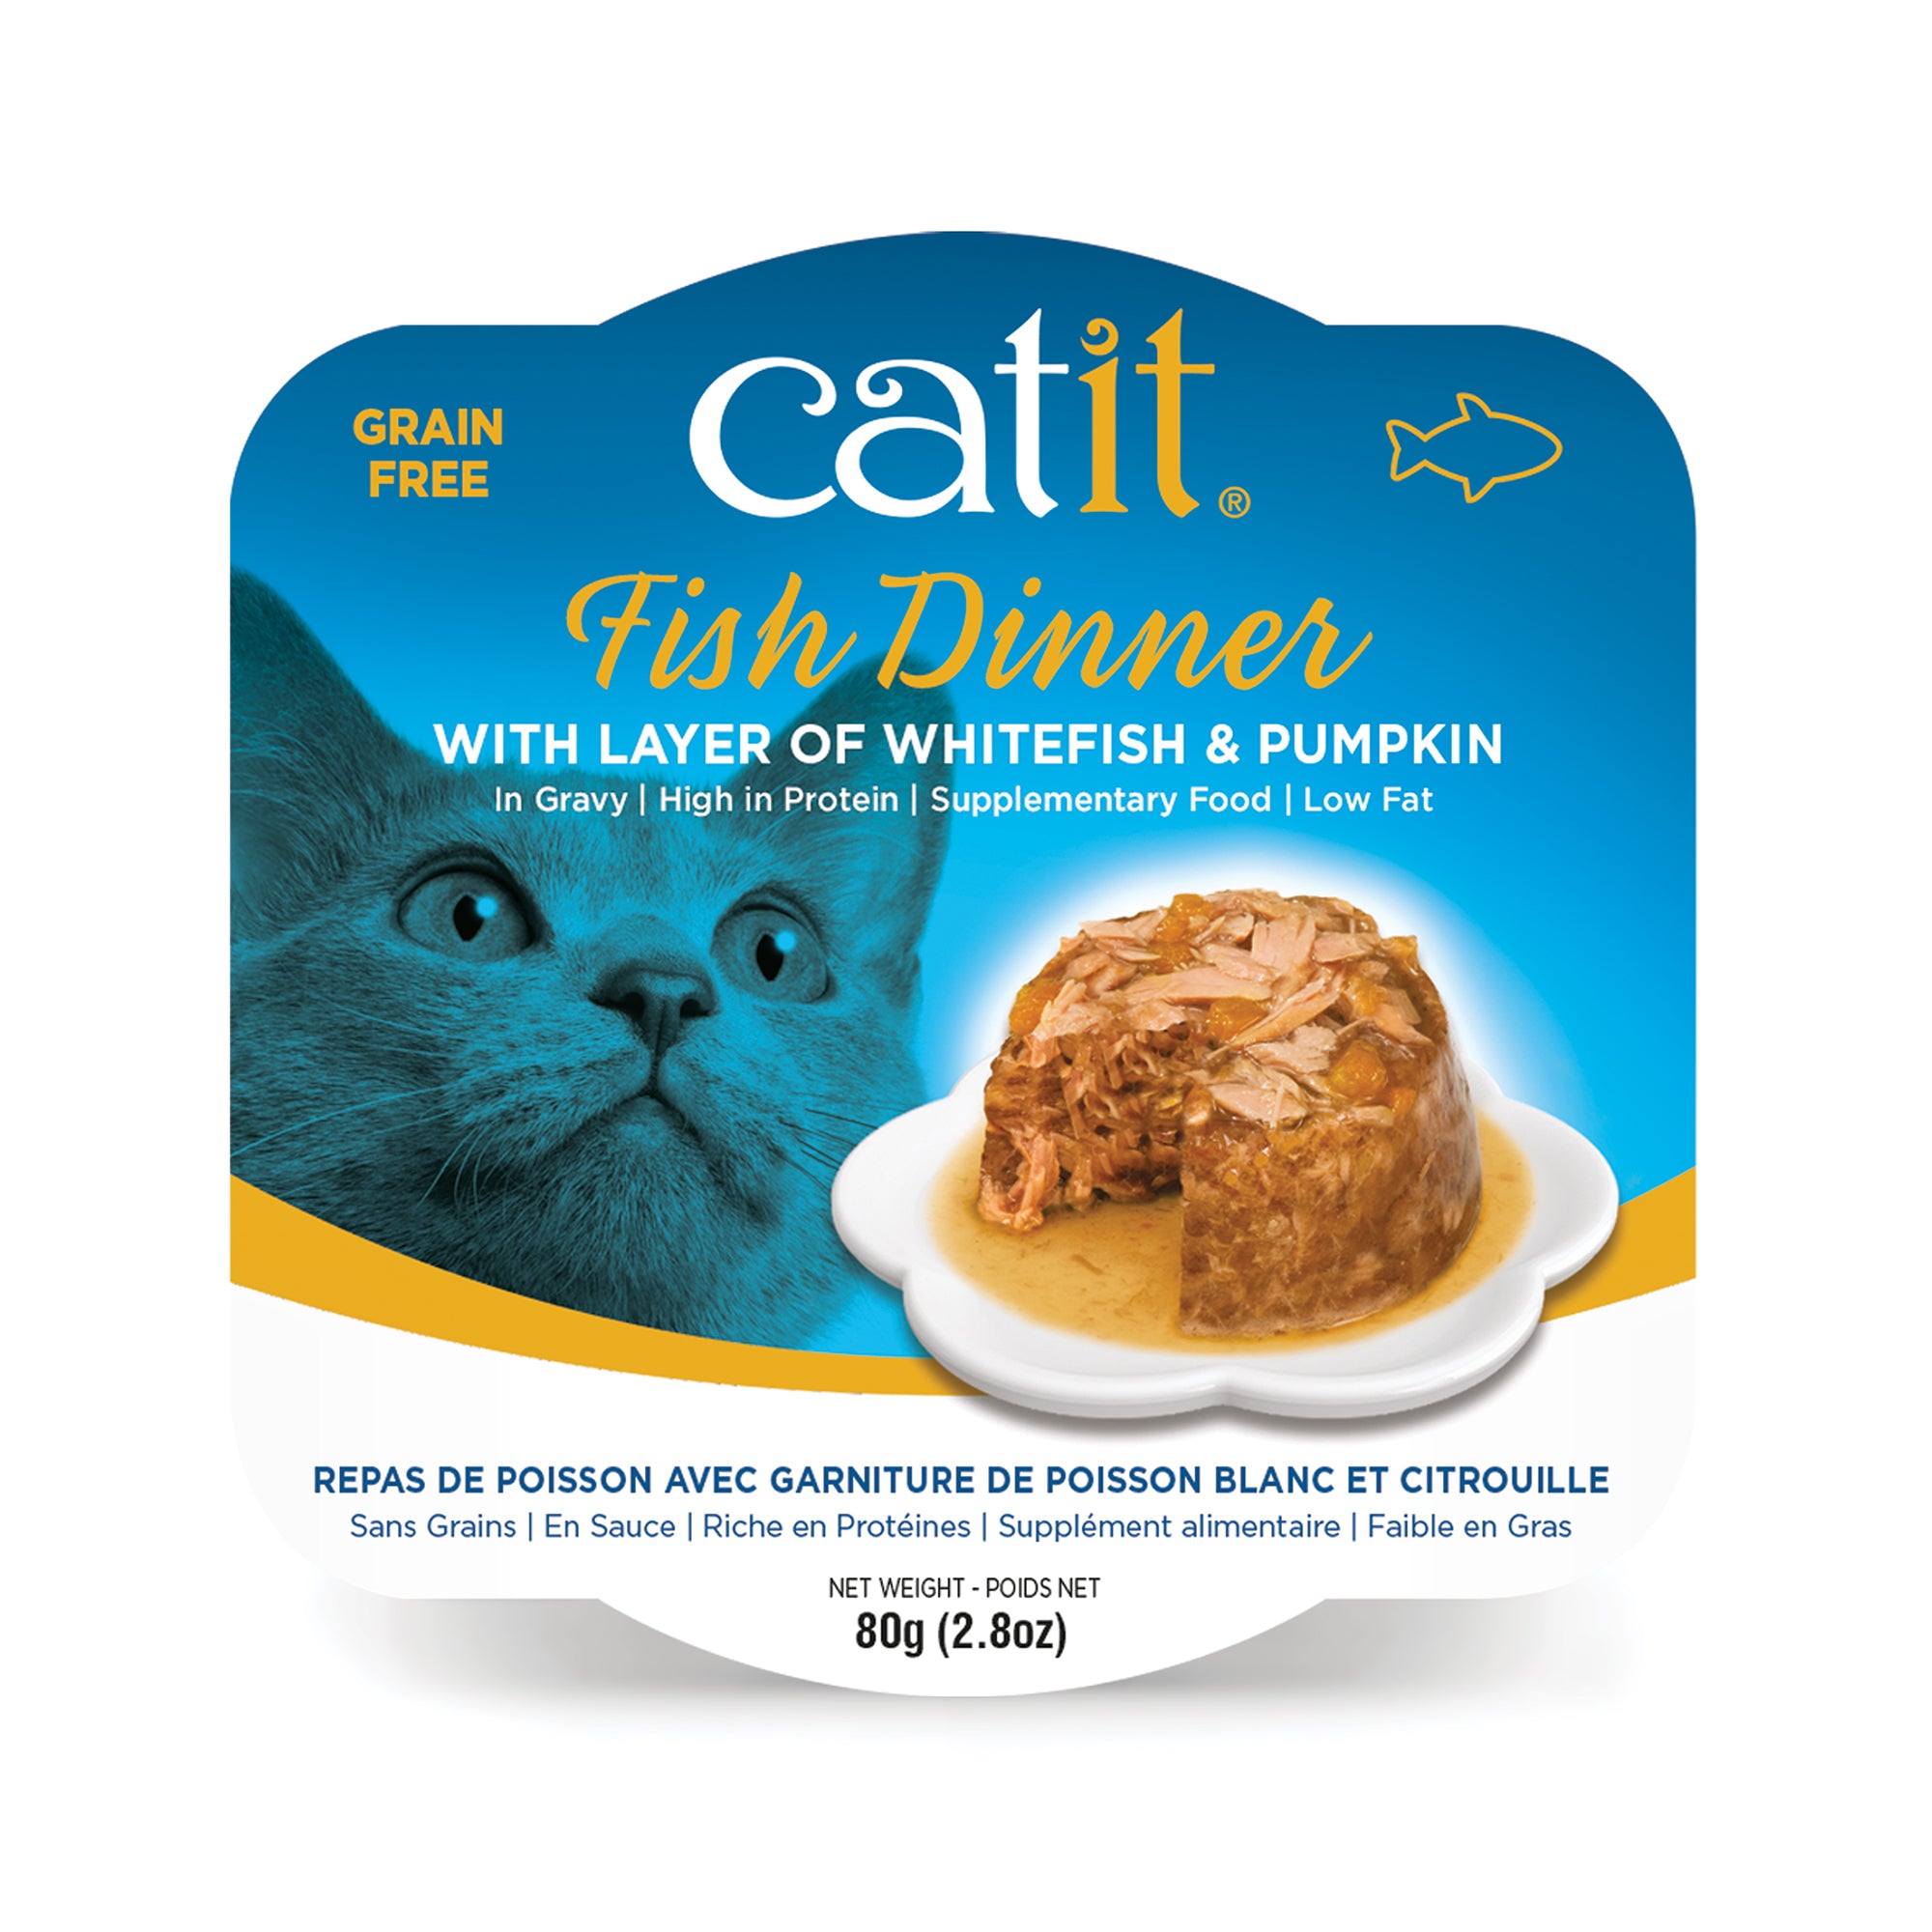 Catit Fish Dinner with Whitefish & Pumpkin - 80 g (2.8 oz)